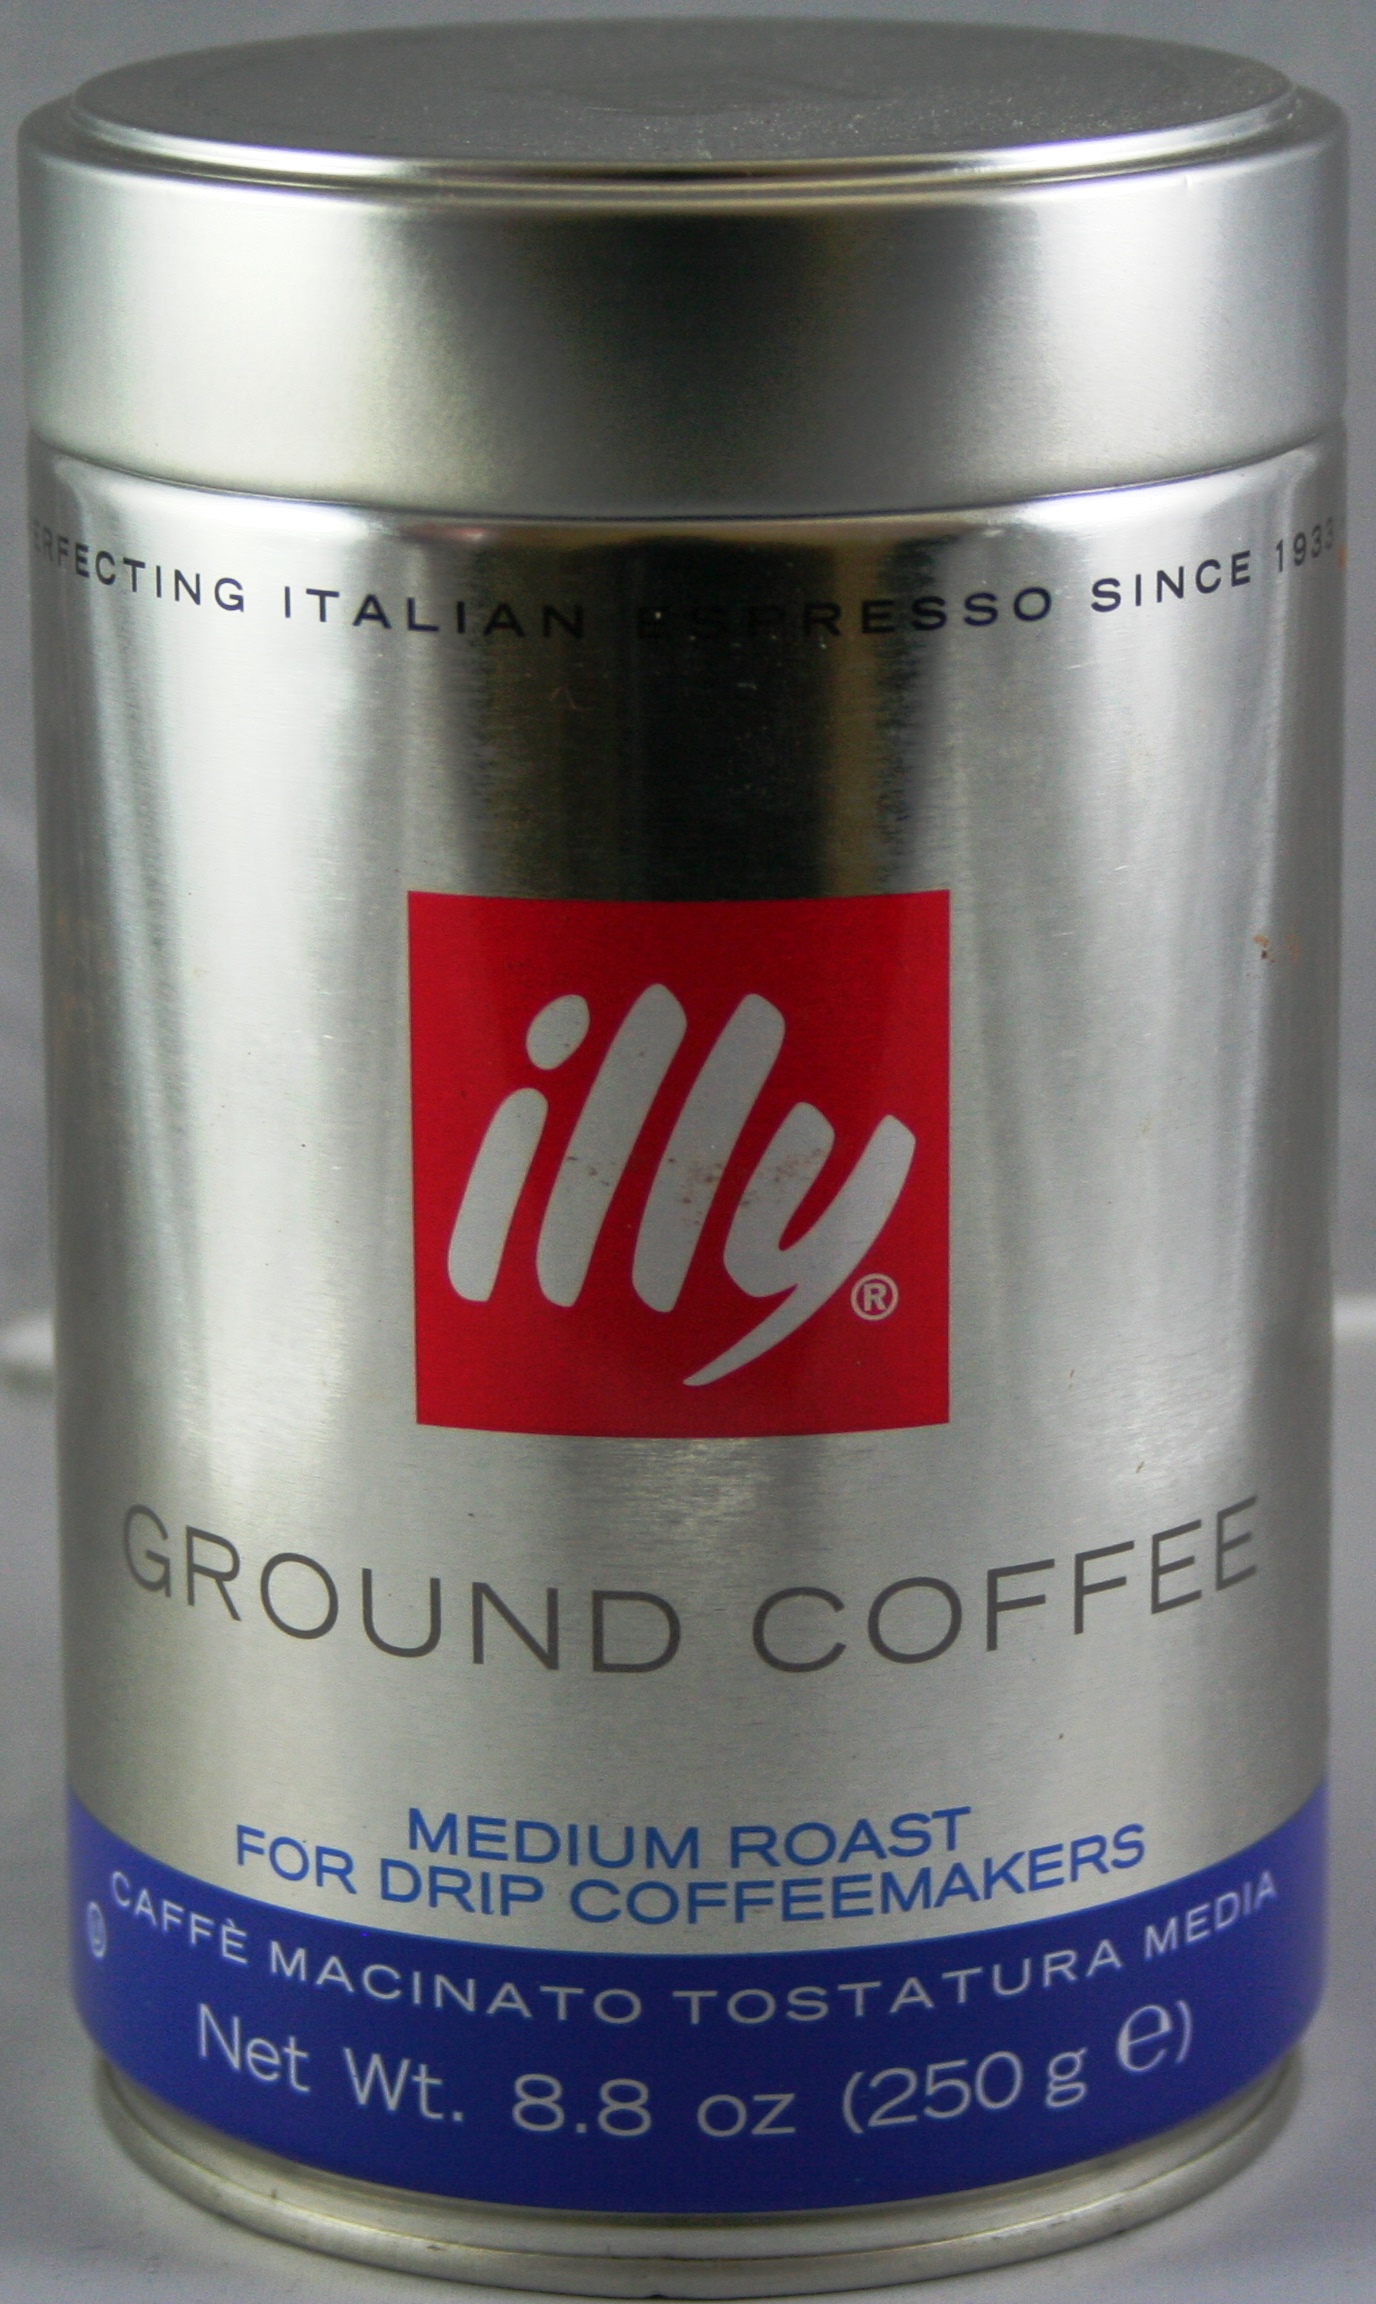 Illy Caffe Coffee Coffee - Whole Bean - Medium Roast - 8.8 oz